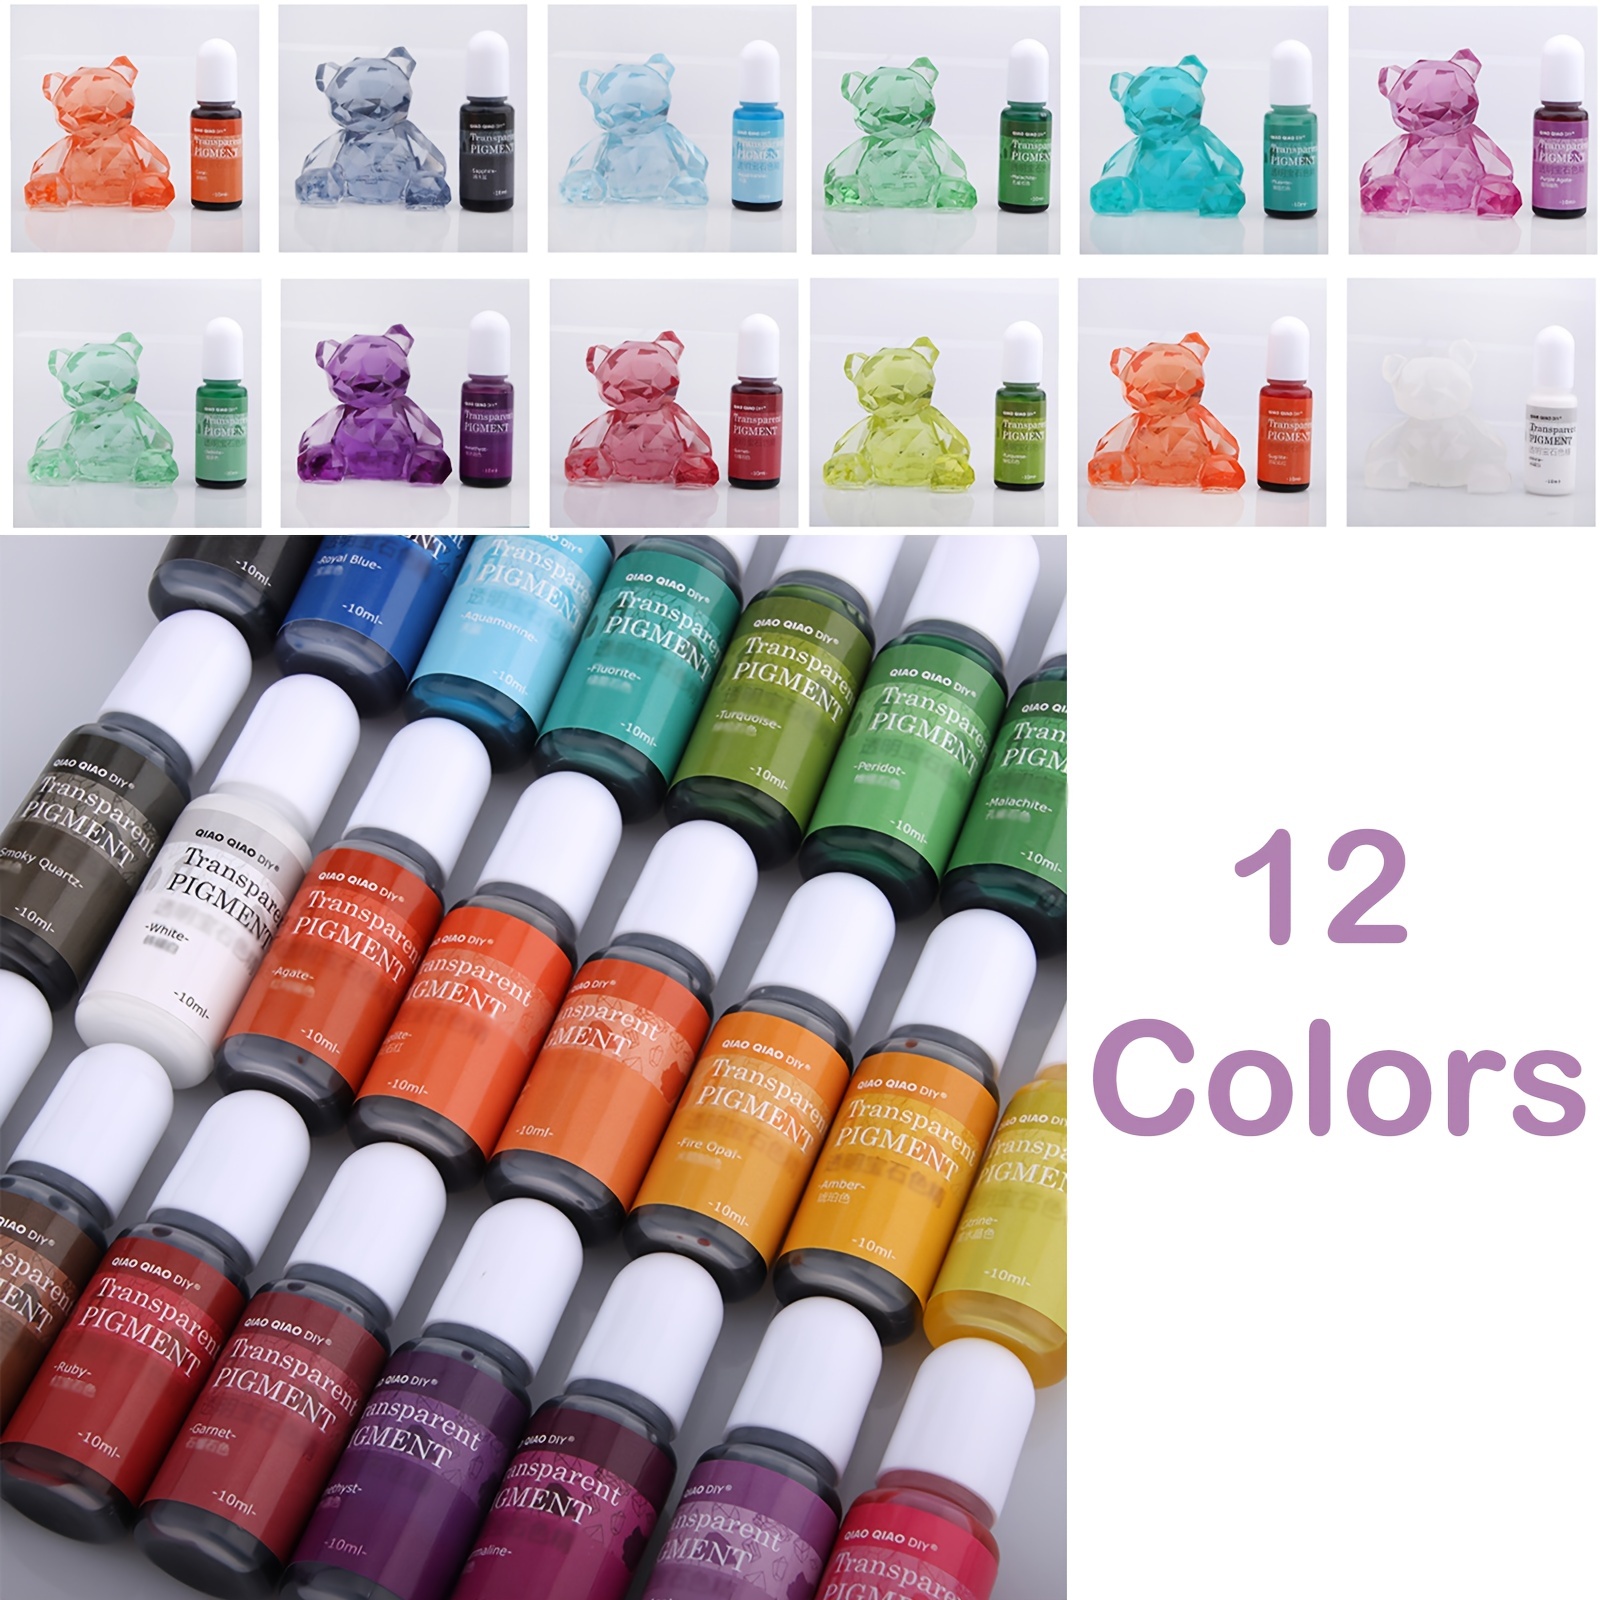  Pigmento de resina epoxi – Tinte de resina epoxi líquida de 15  colores – Colorante de resina epoxi altamente concentrado para colorear  resina arte, suministros de fabricación de joyas de bricolaje – 